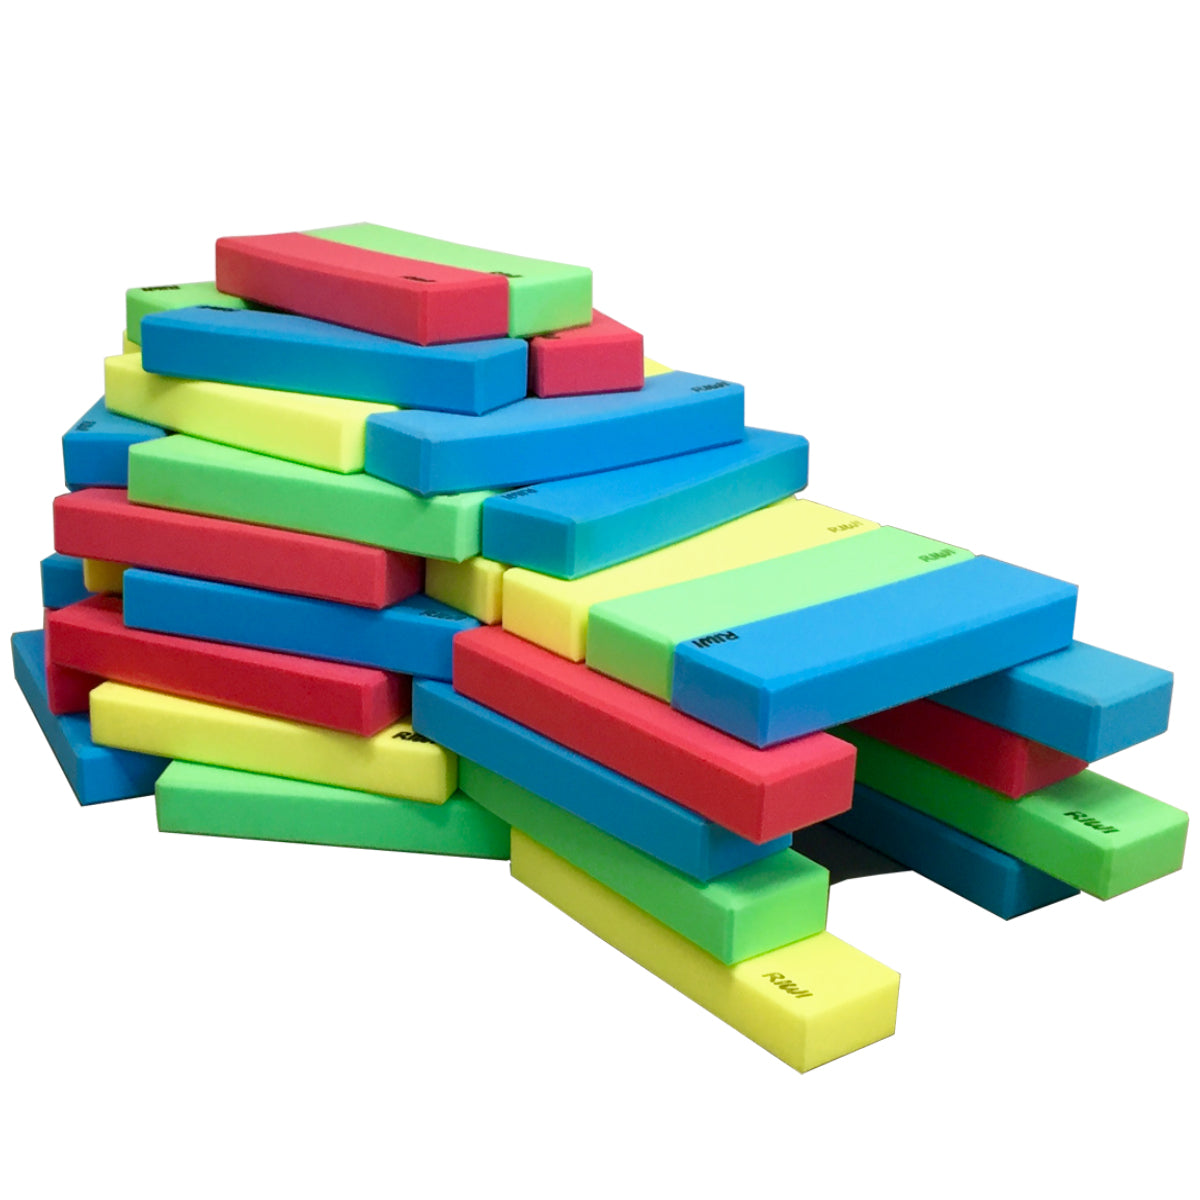 RIWI® building blocks